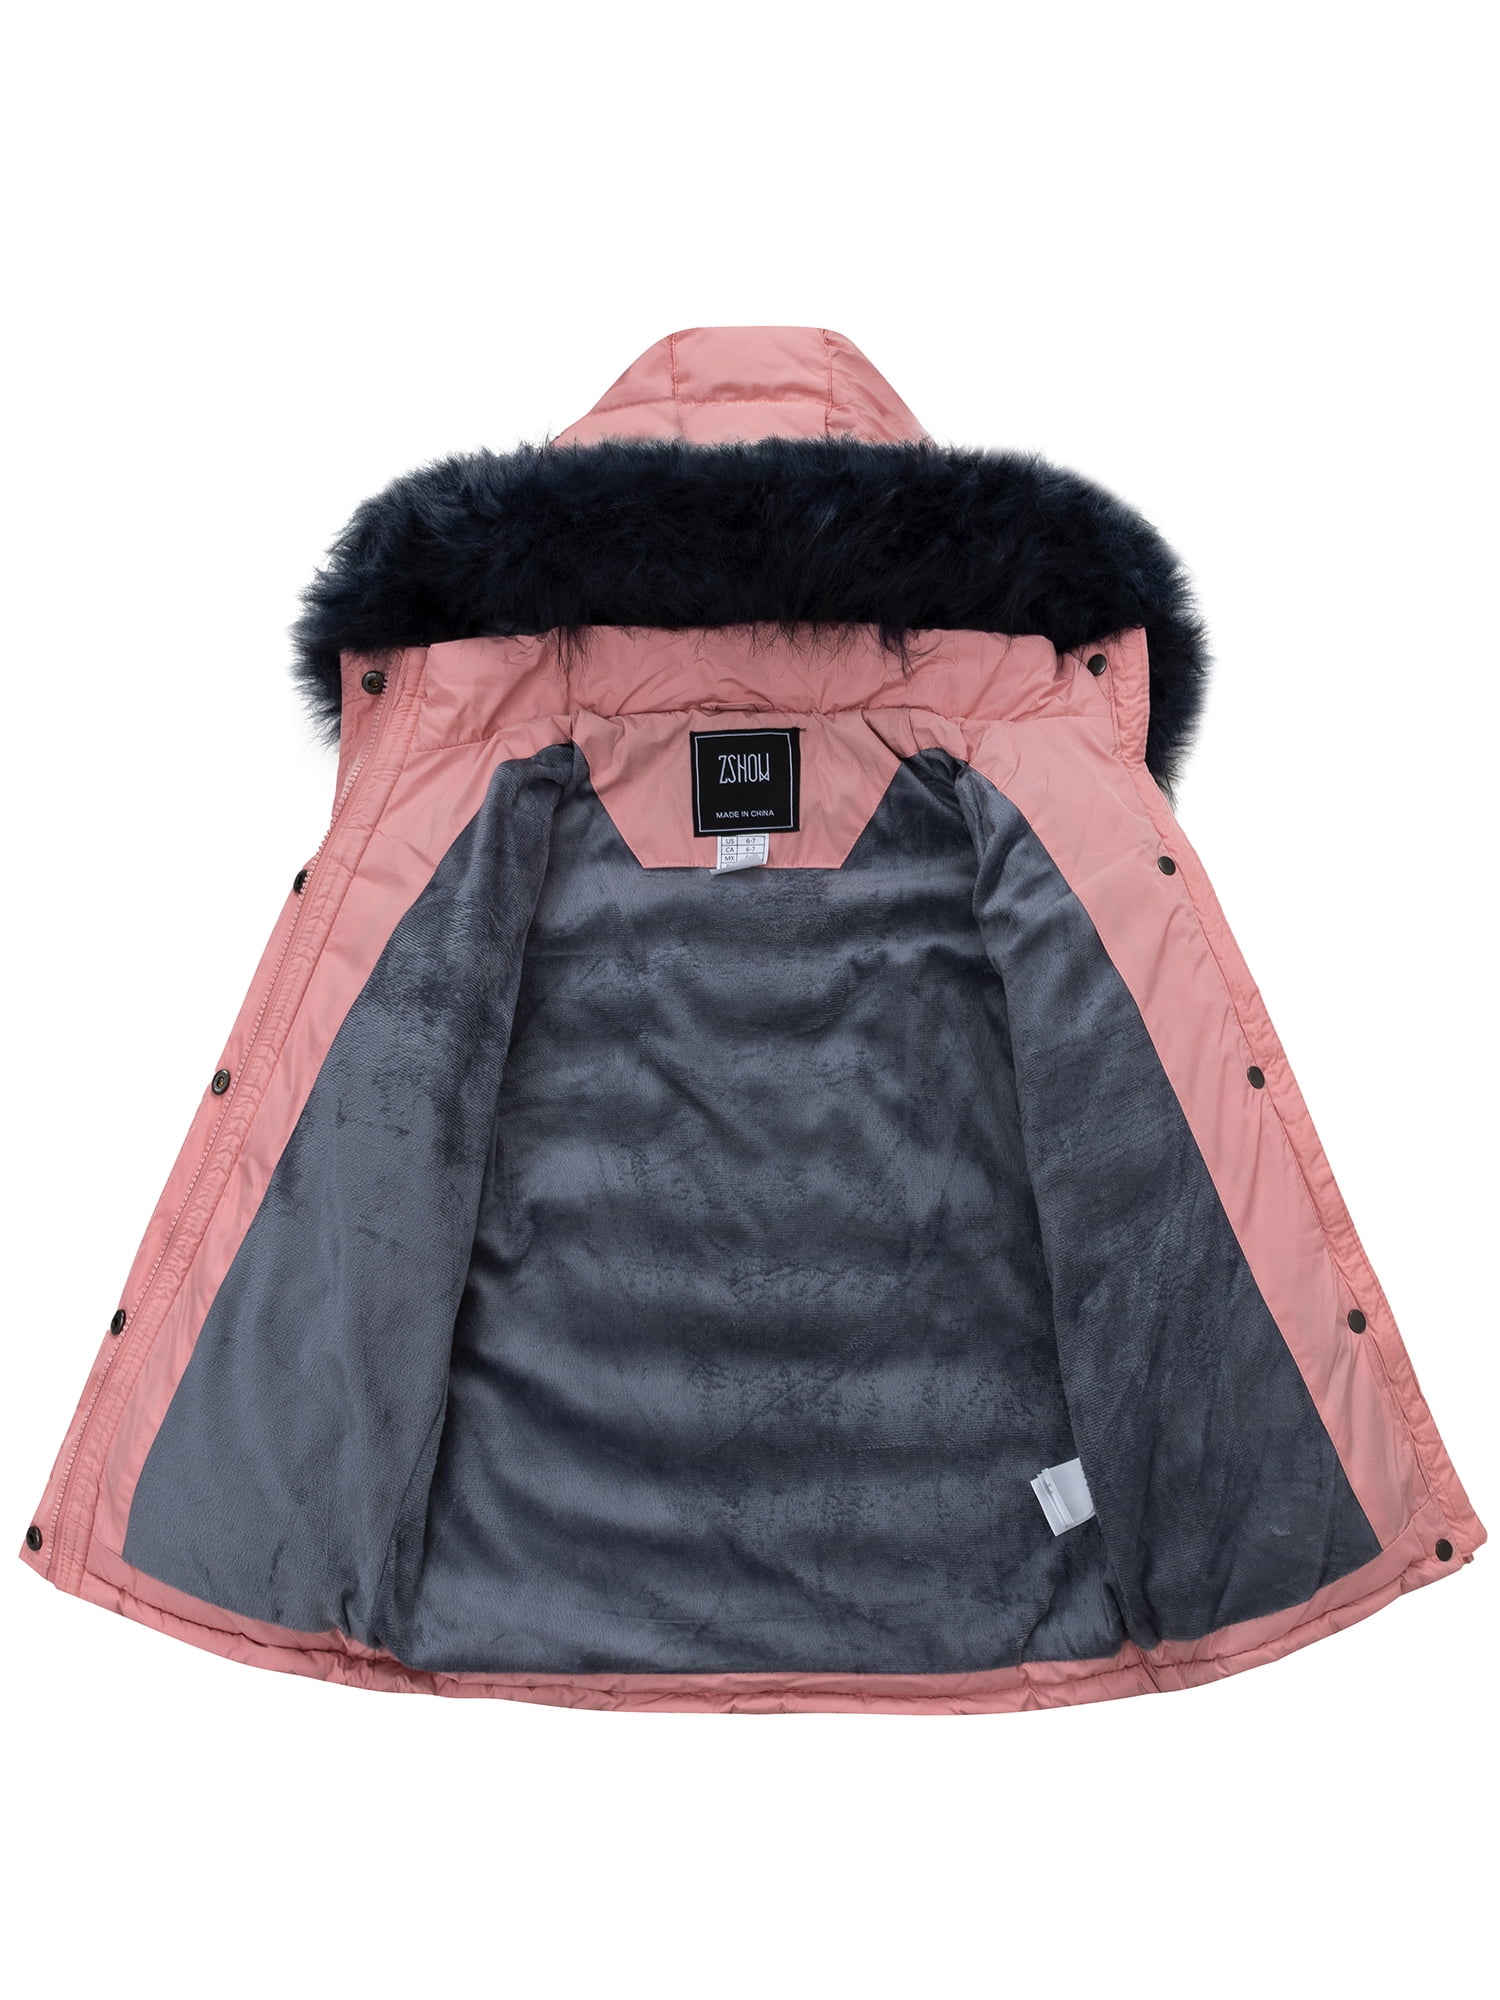 Jacket Puffer Coral Coat Padded Windproof ZSHOW Puffy Winter Girls\' Pink 14/16 Jacket Waterptproof